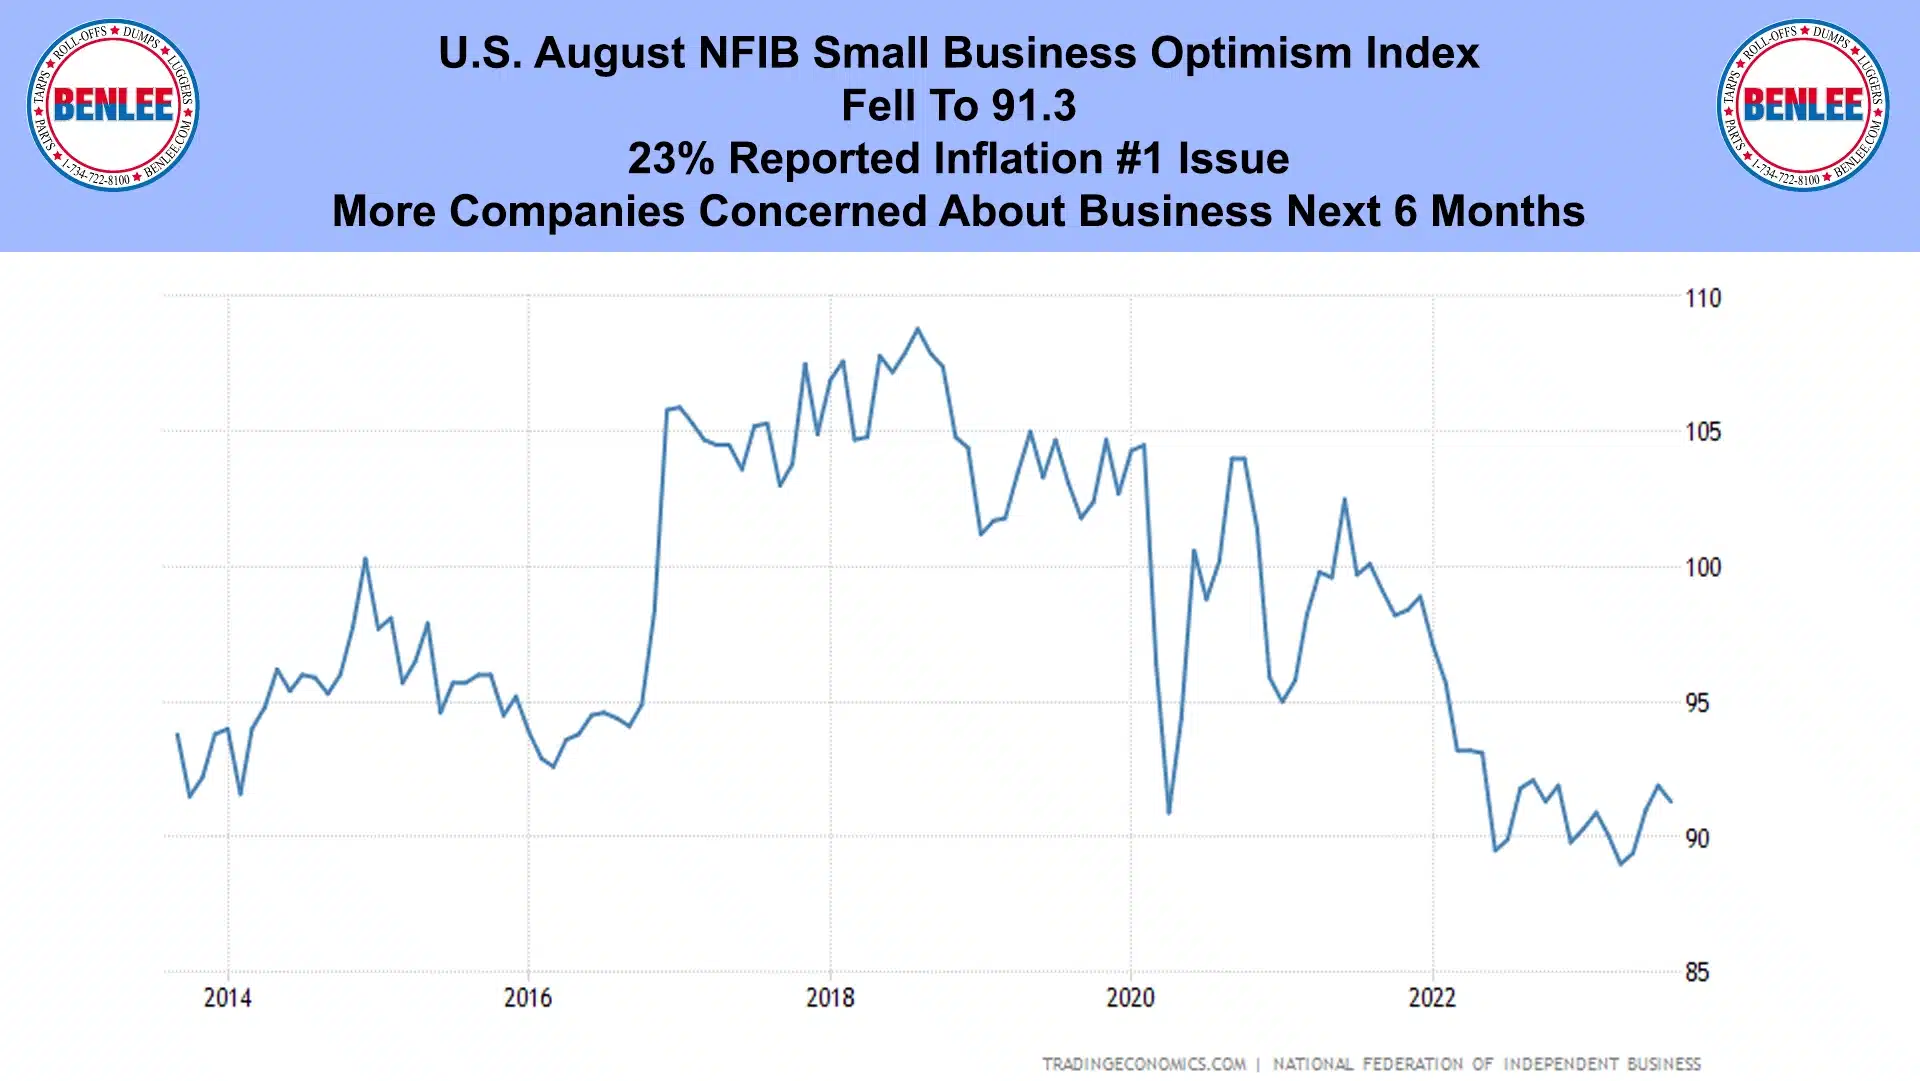 U.S. August NFIB Small Business Optimism Index